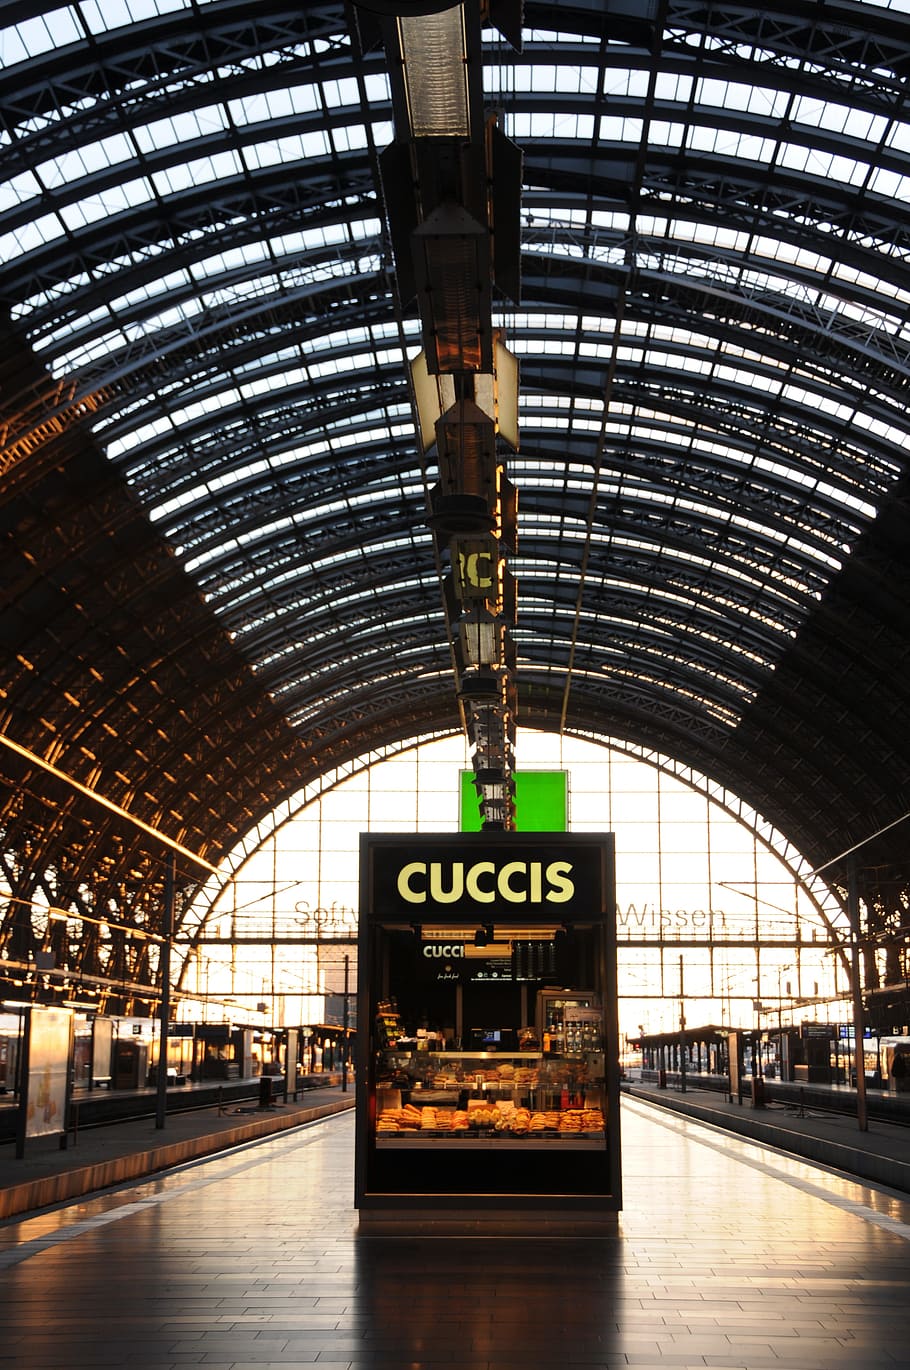 Concourse, Kiosk, Frankfurt, estación de ferrocarril, deutsche bahn, tren, arquitectura, transporte, interiores, iluminado